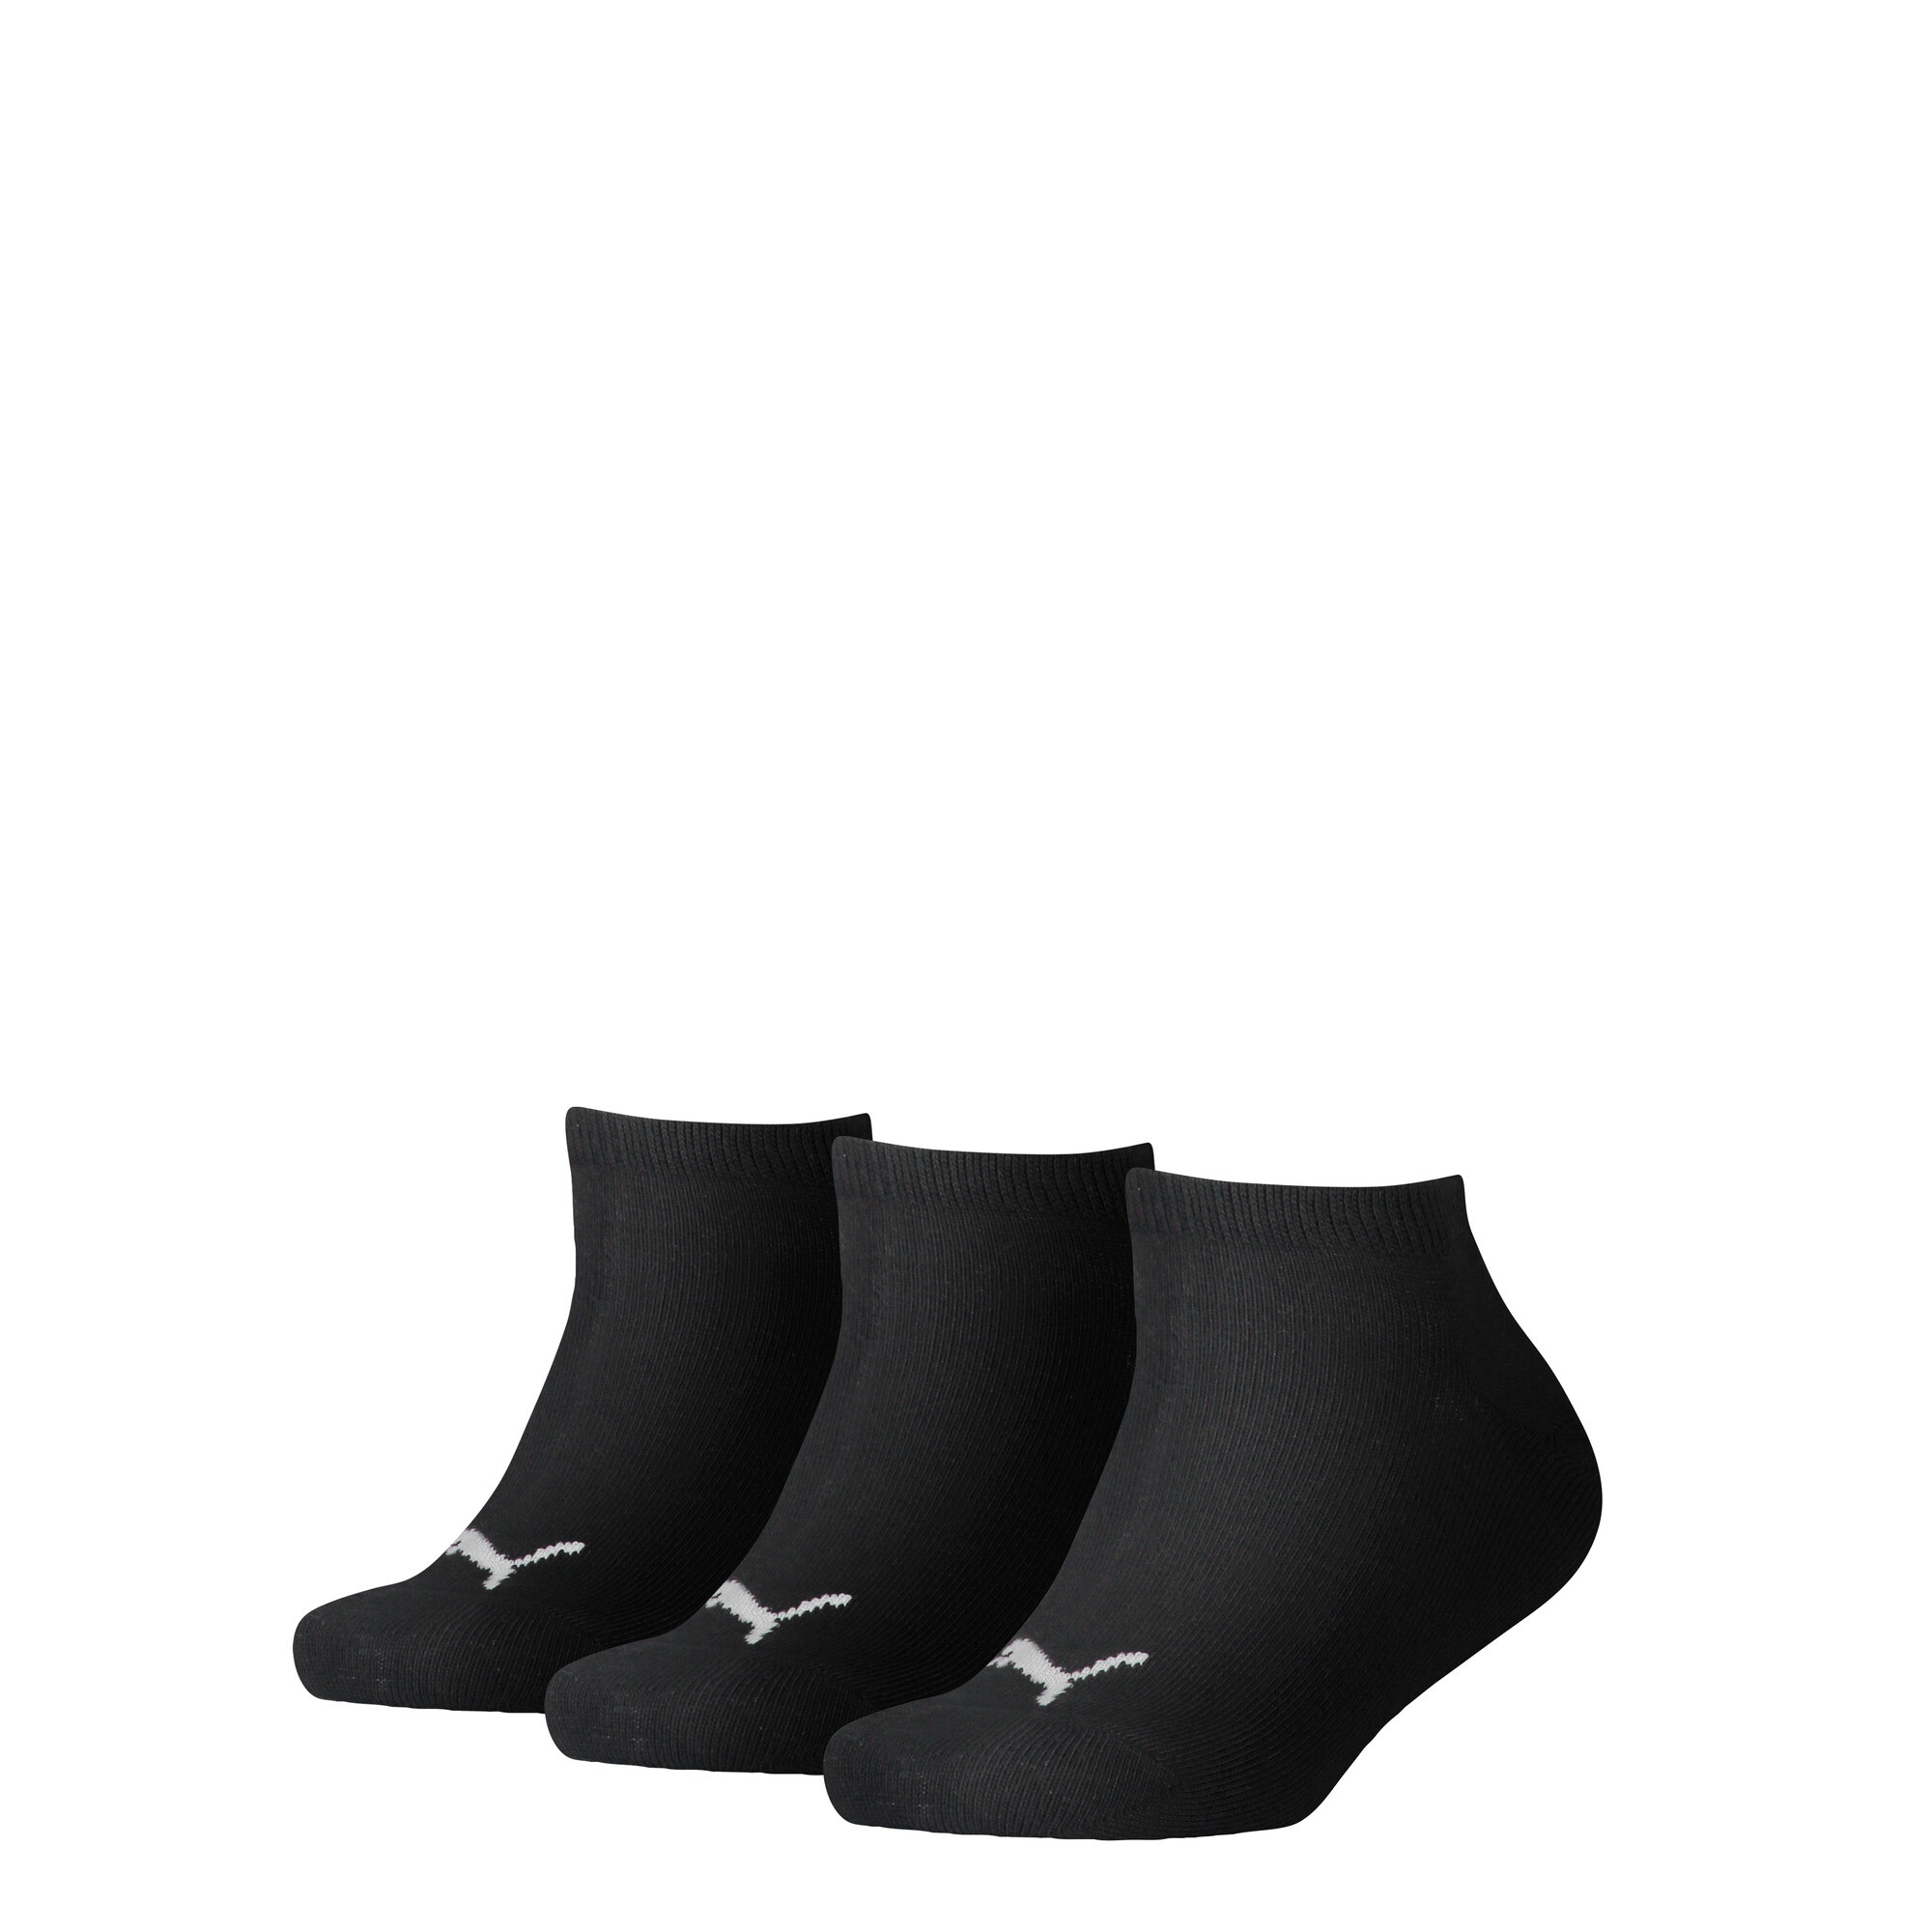 Kids' PUMA Invisible Socks 3 Pack In Black, Size 39-42